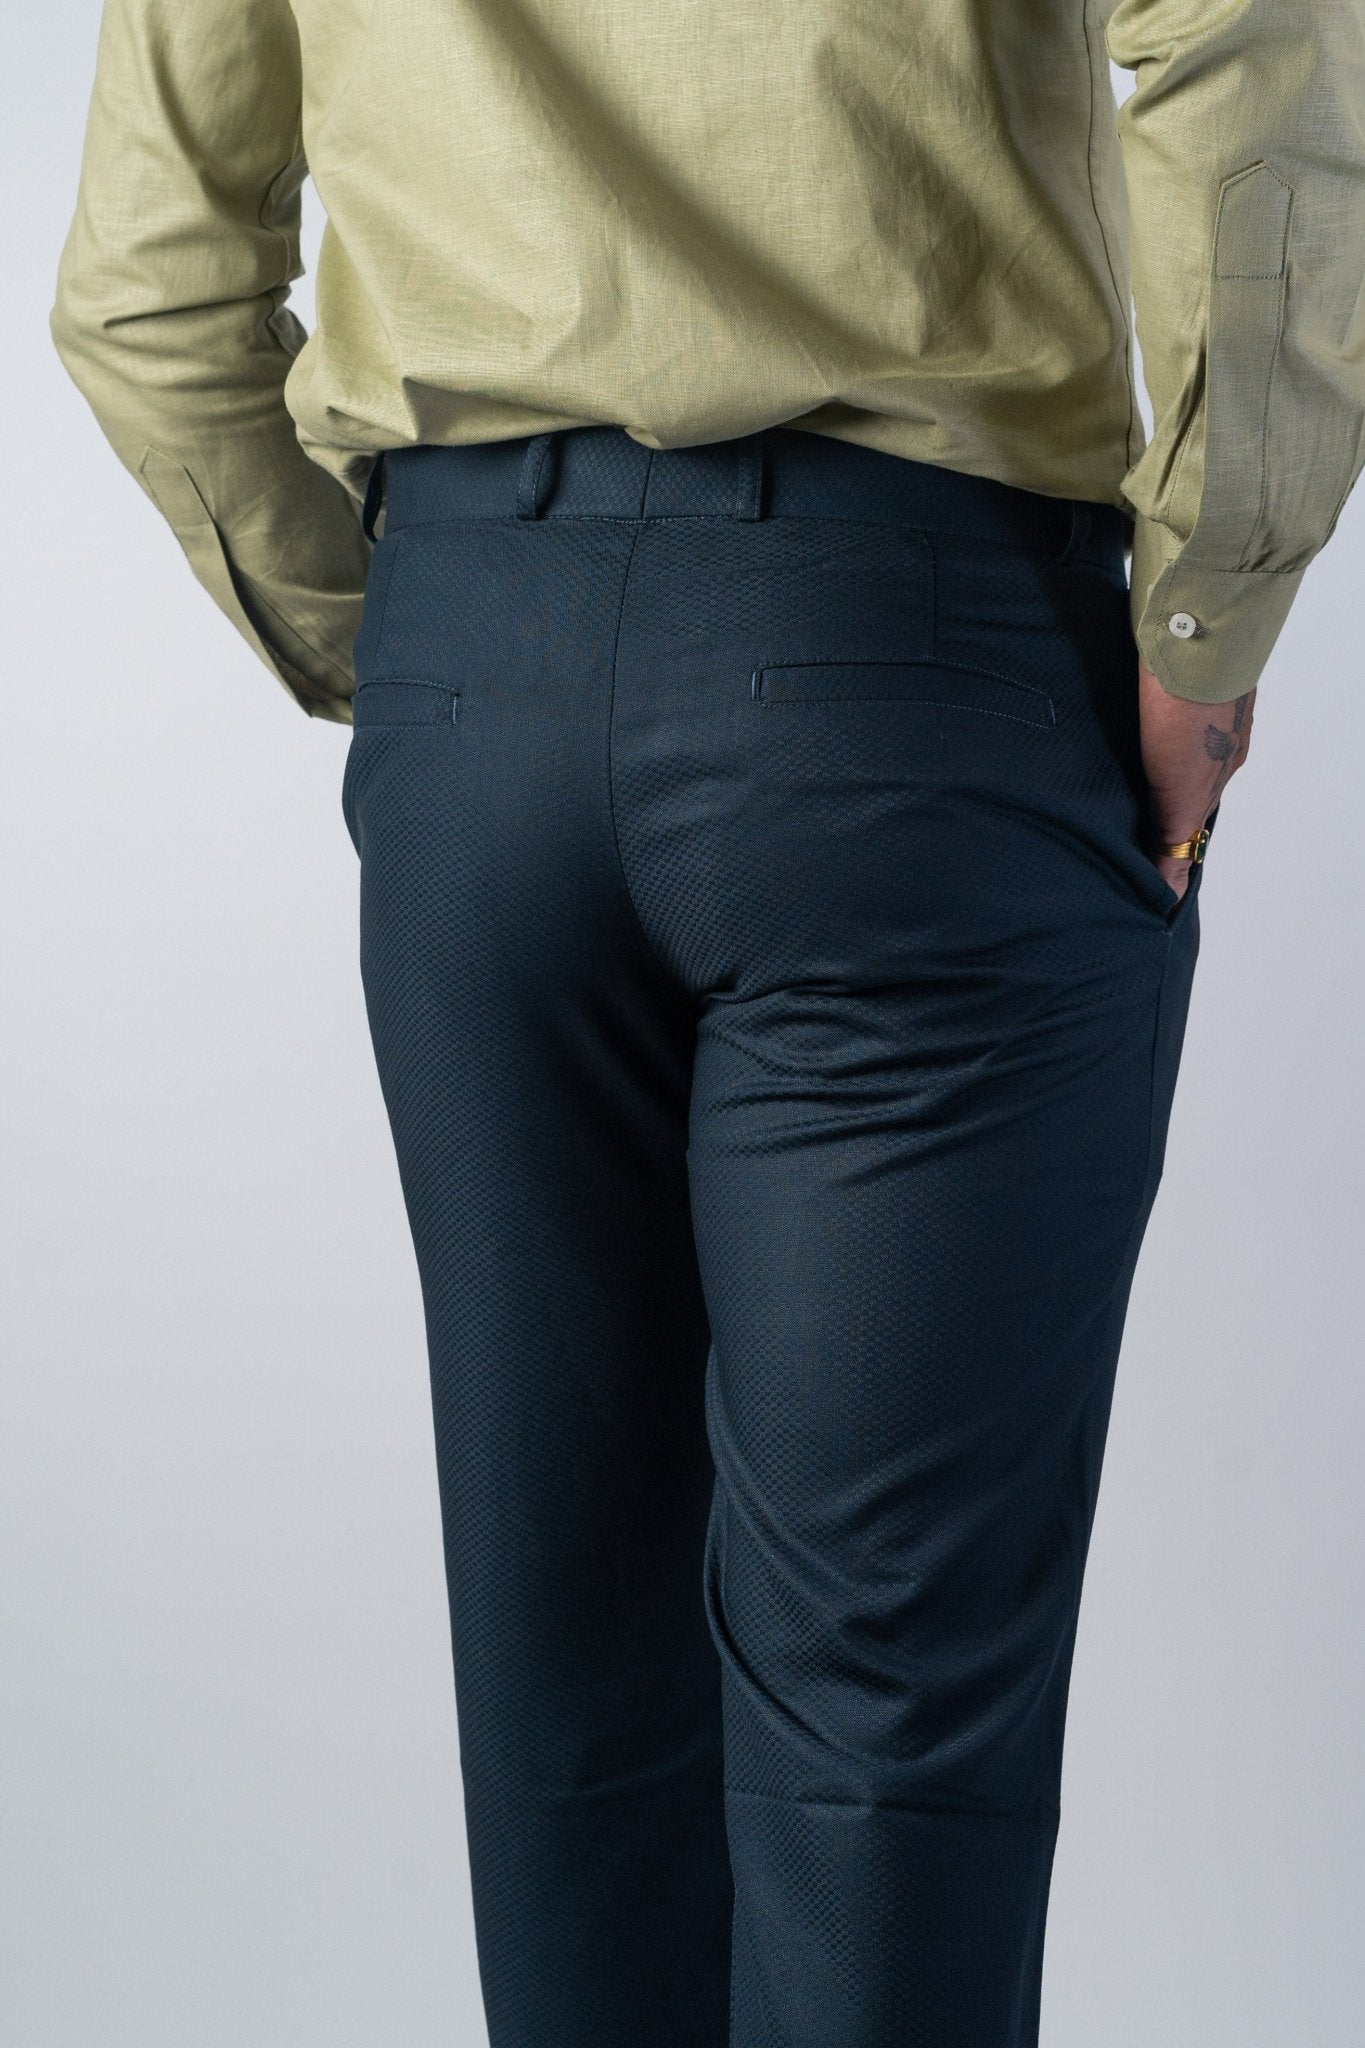 Dark Grey Color Formal Cotton Pant for Men - Punekar Cotton